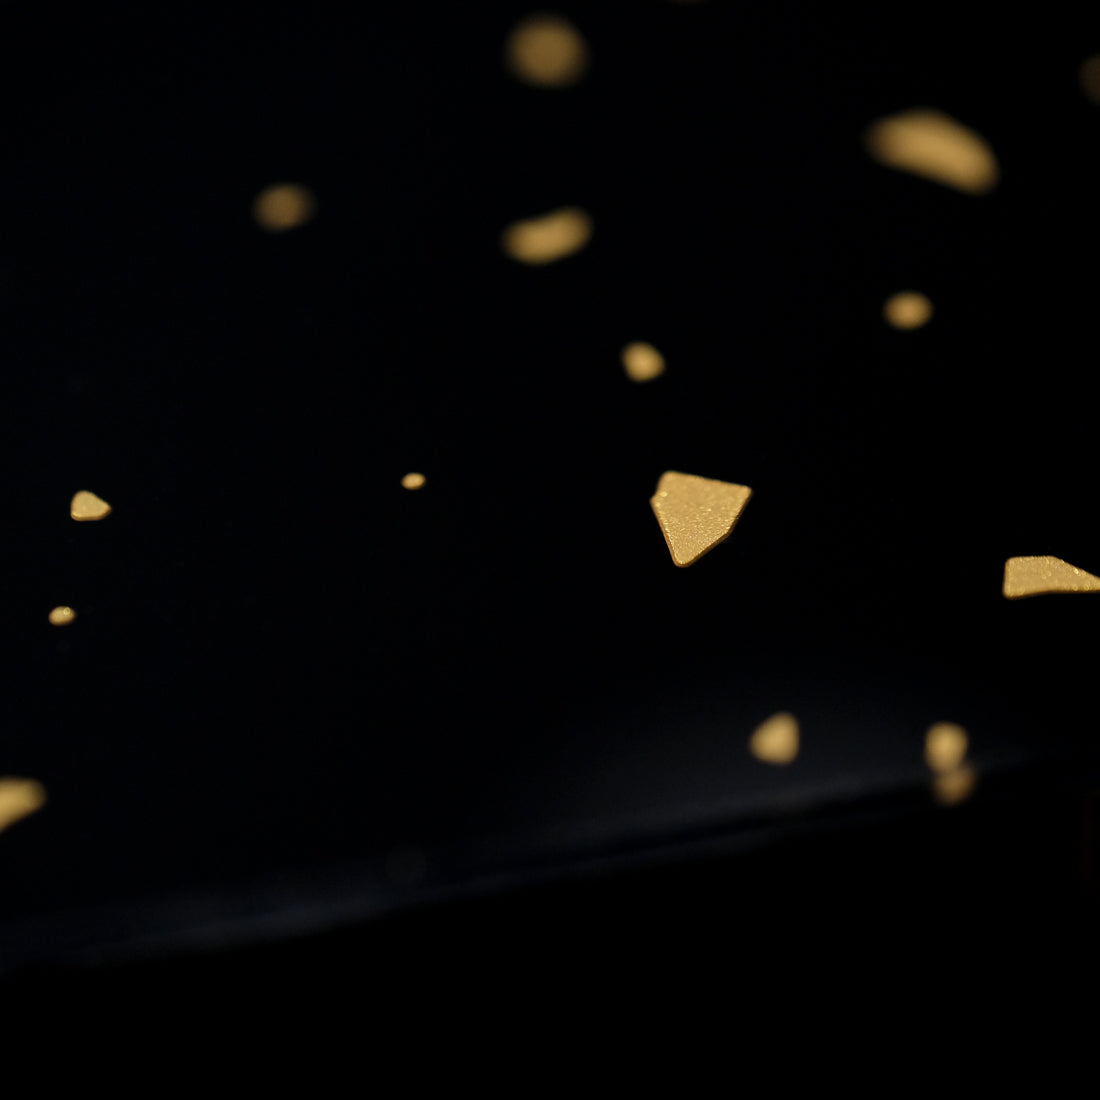 Speckled - Jaguar Pickguard - Gold on Black Plexi